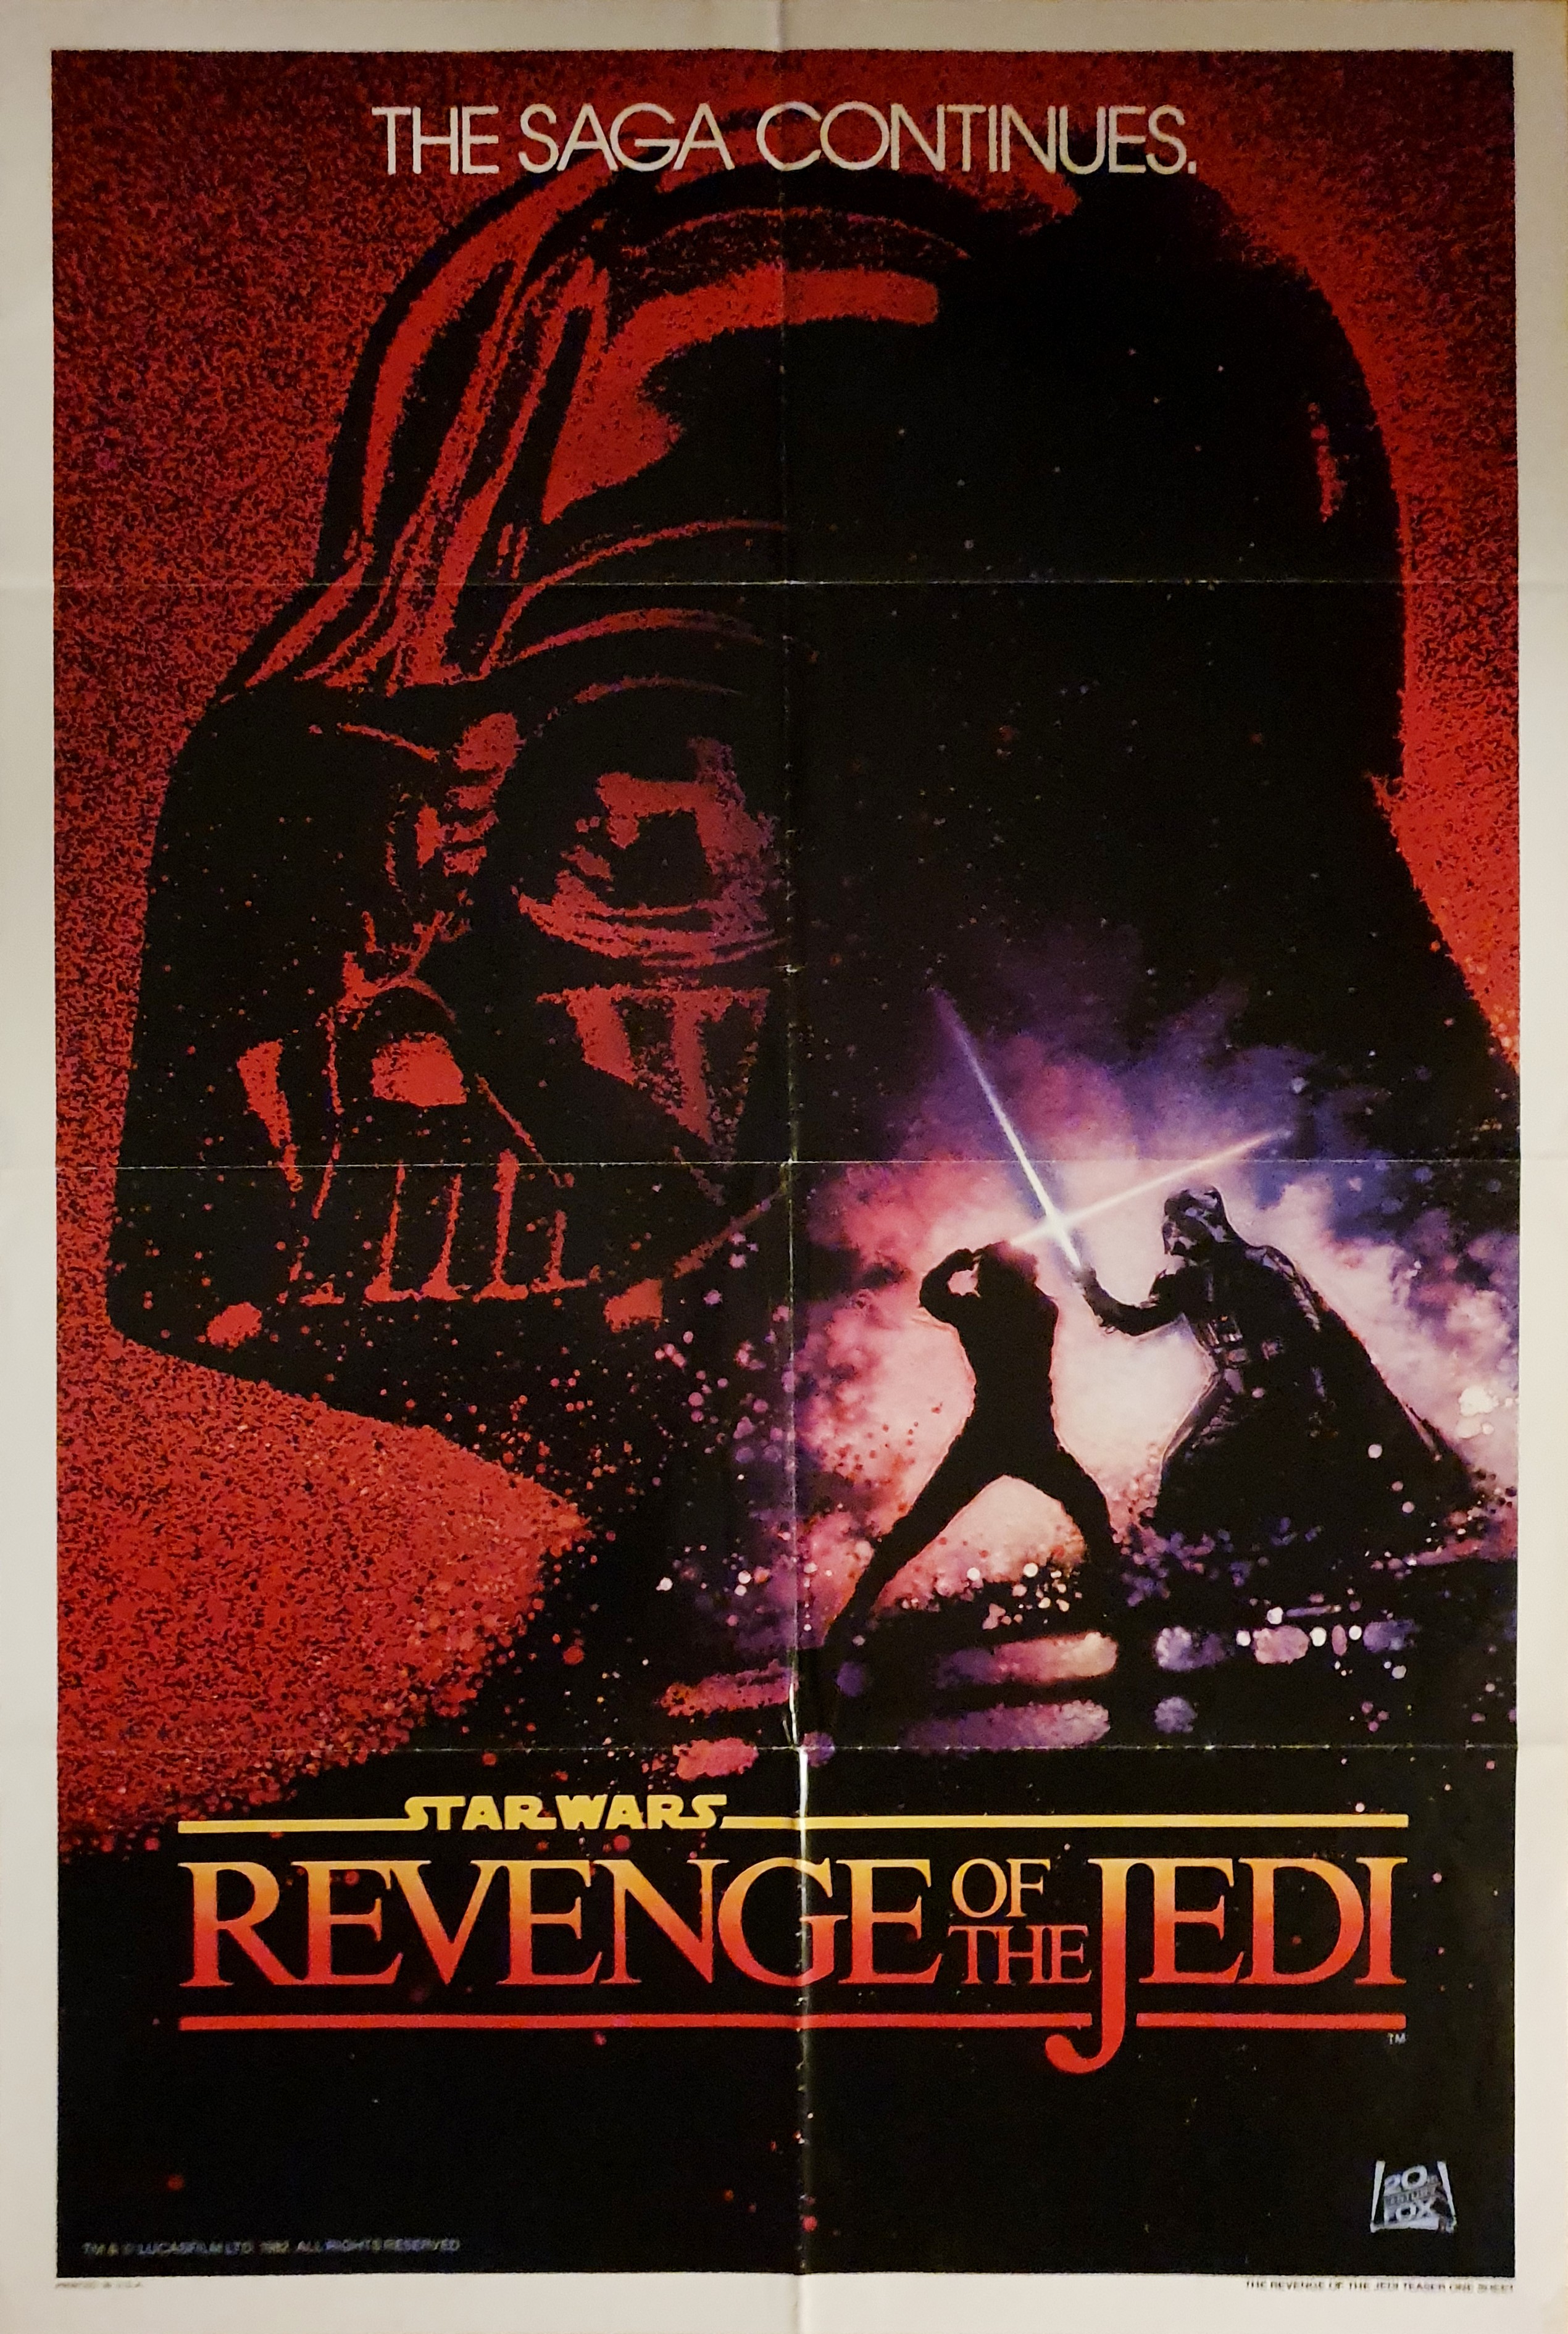 Star Wars Movie Poster 1977 3 Sheet (41x81)